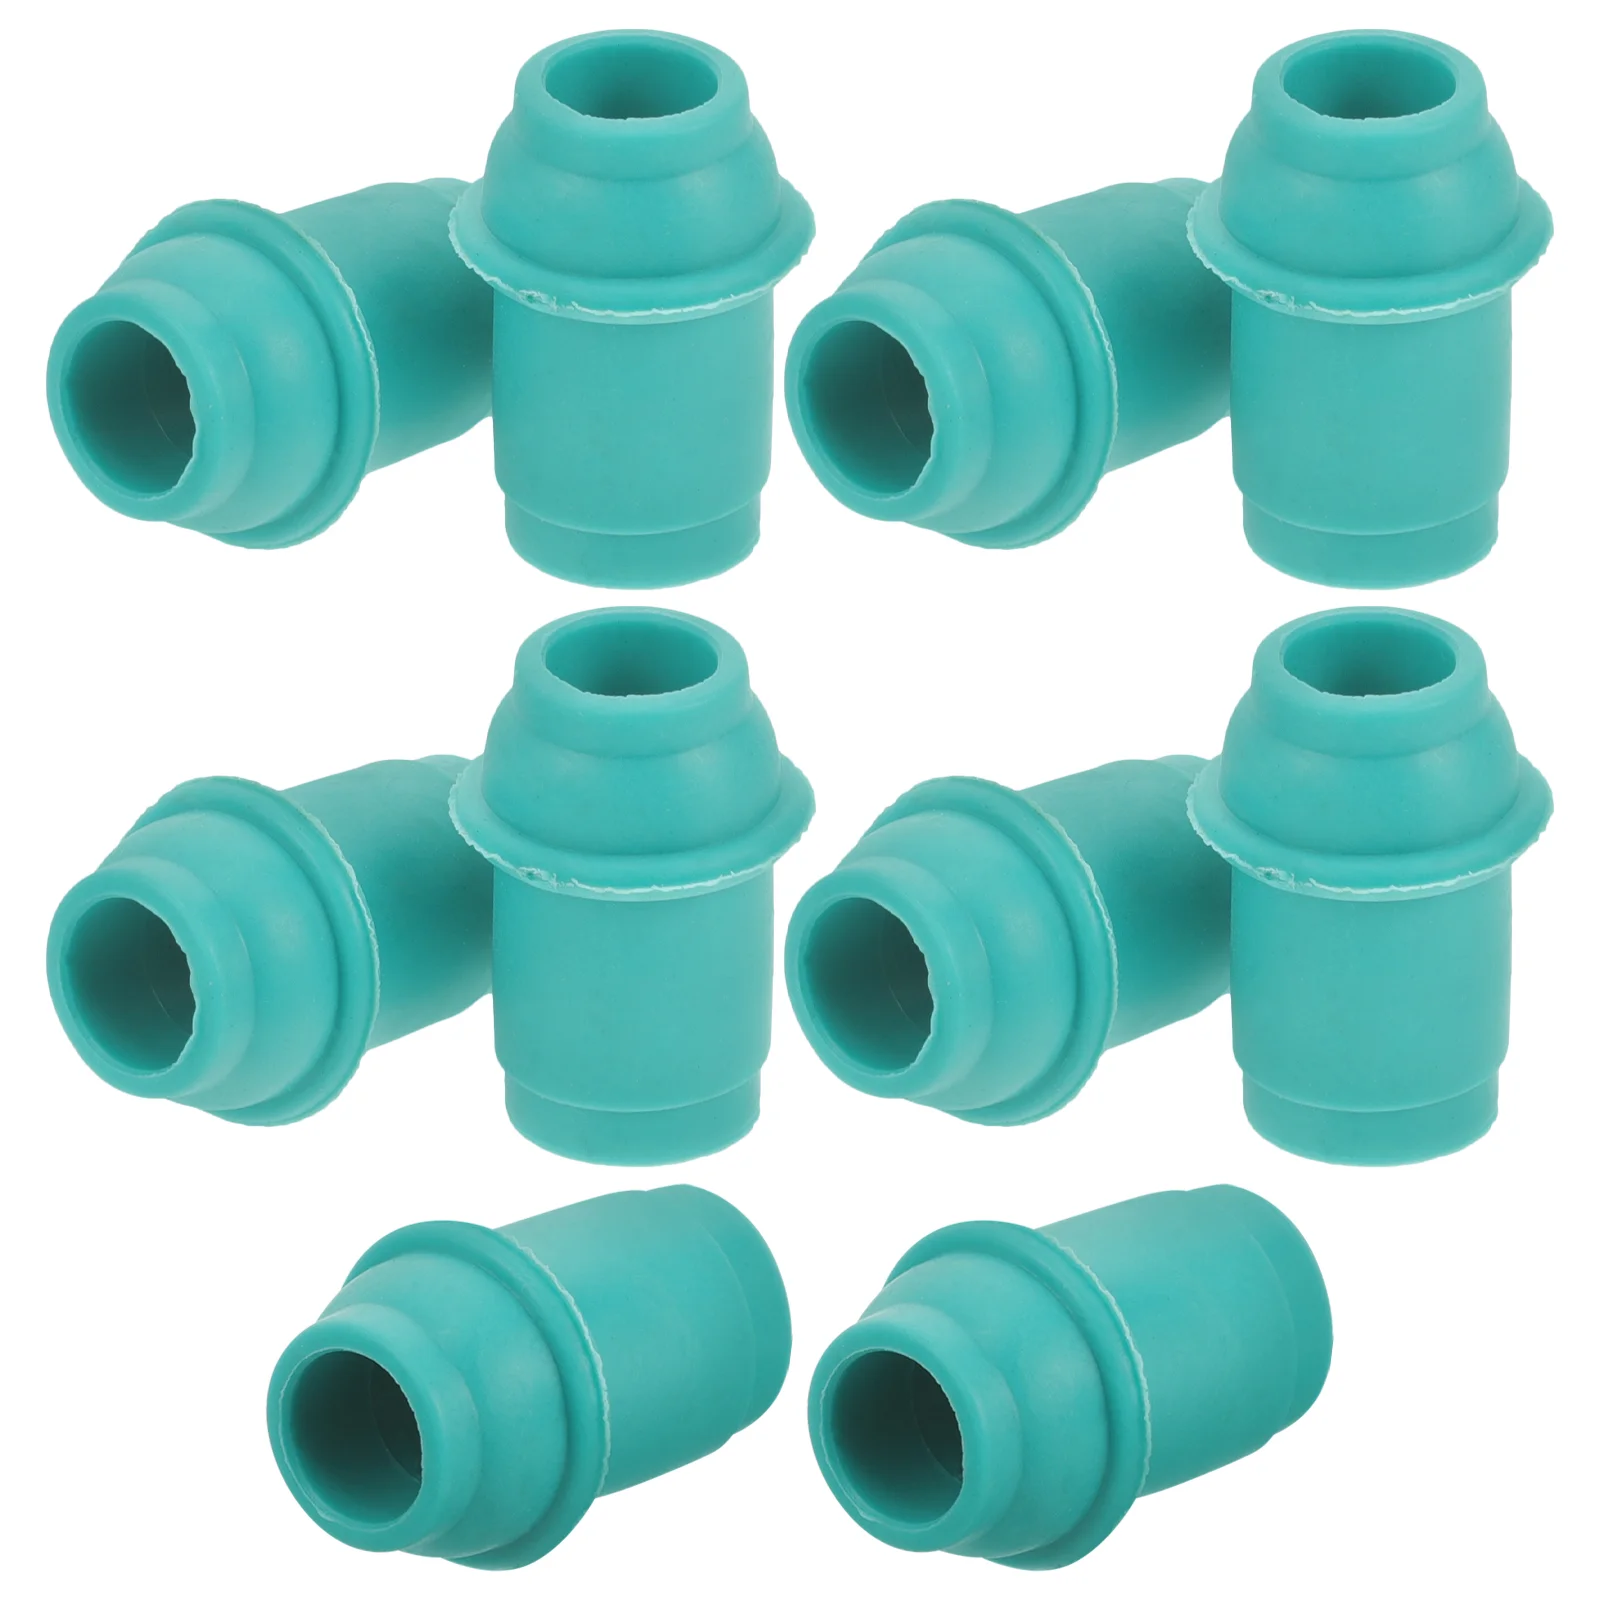 10pcs  Connectors For Pumps Reusable Cupping Parts Replacement Nozzle Tips